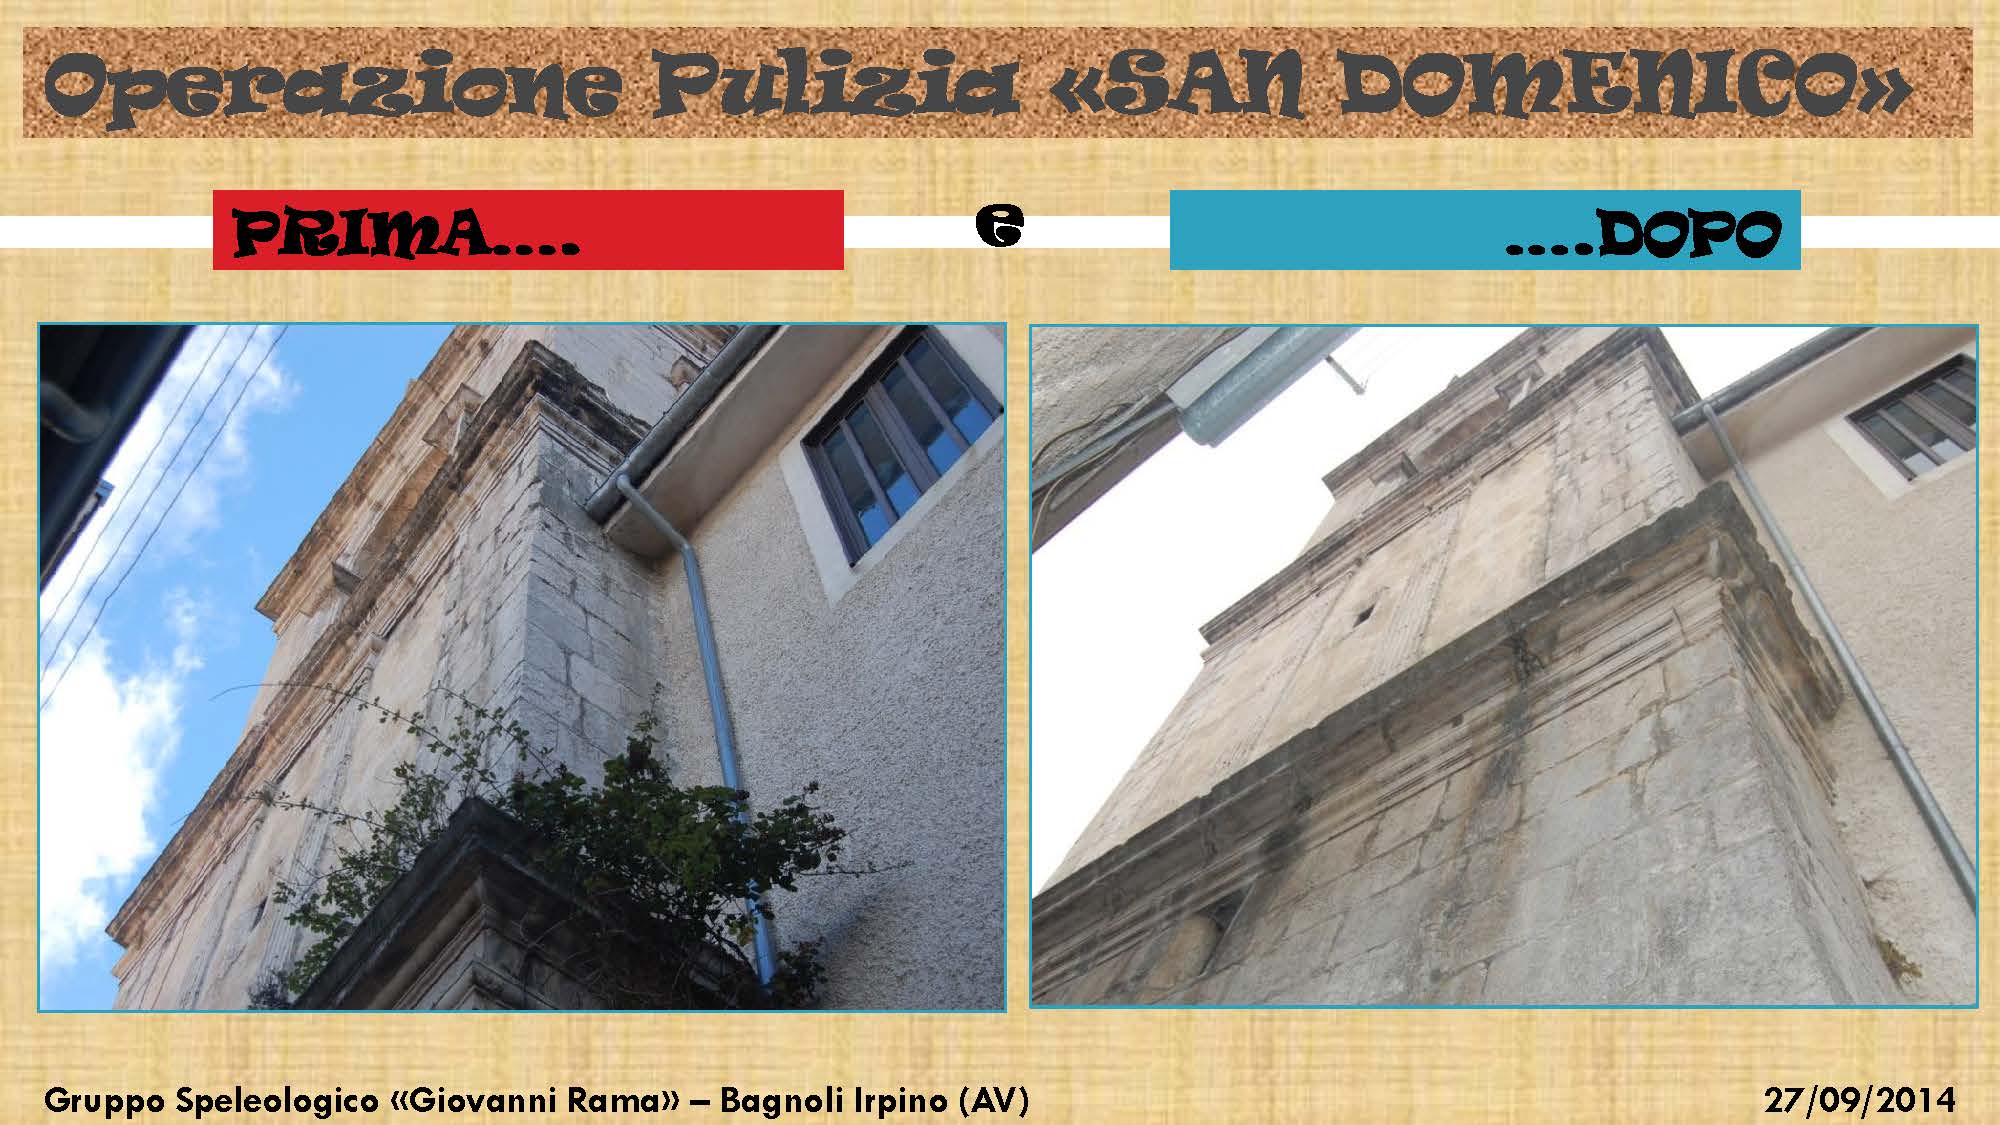 Bagnoli-Pulizia-San-Domenico-2014_Pagina_12